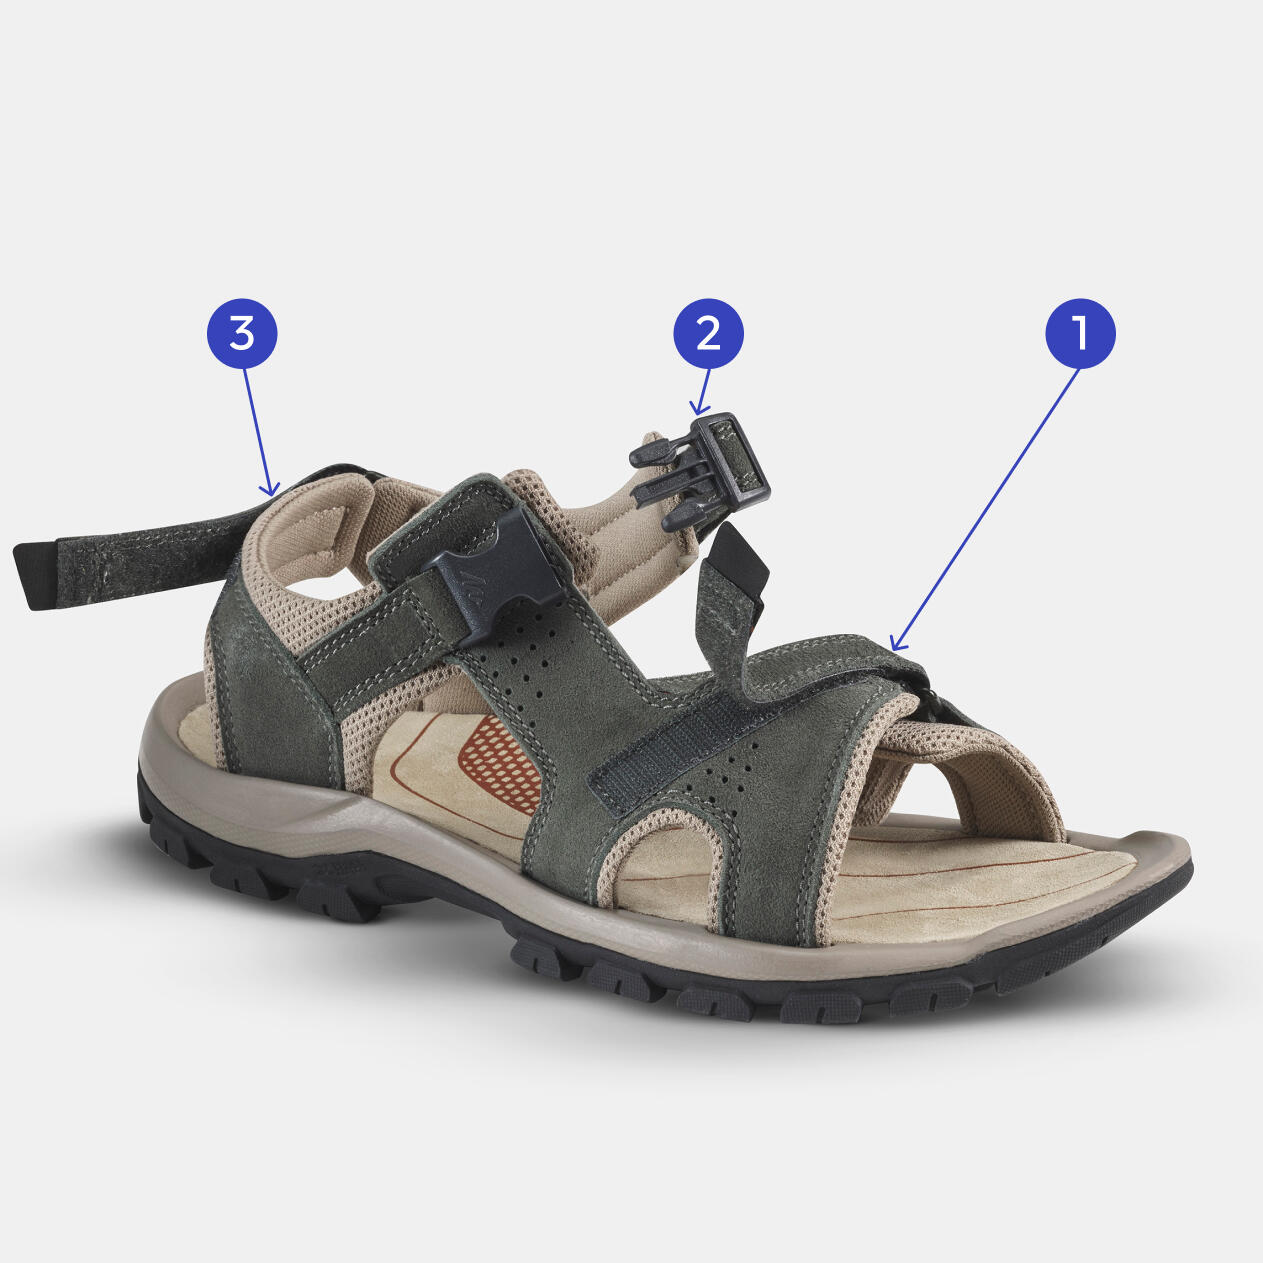 fastening-hiking-sandals